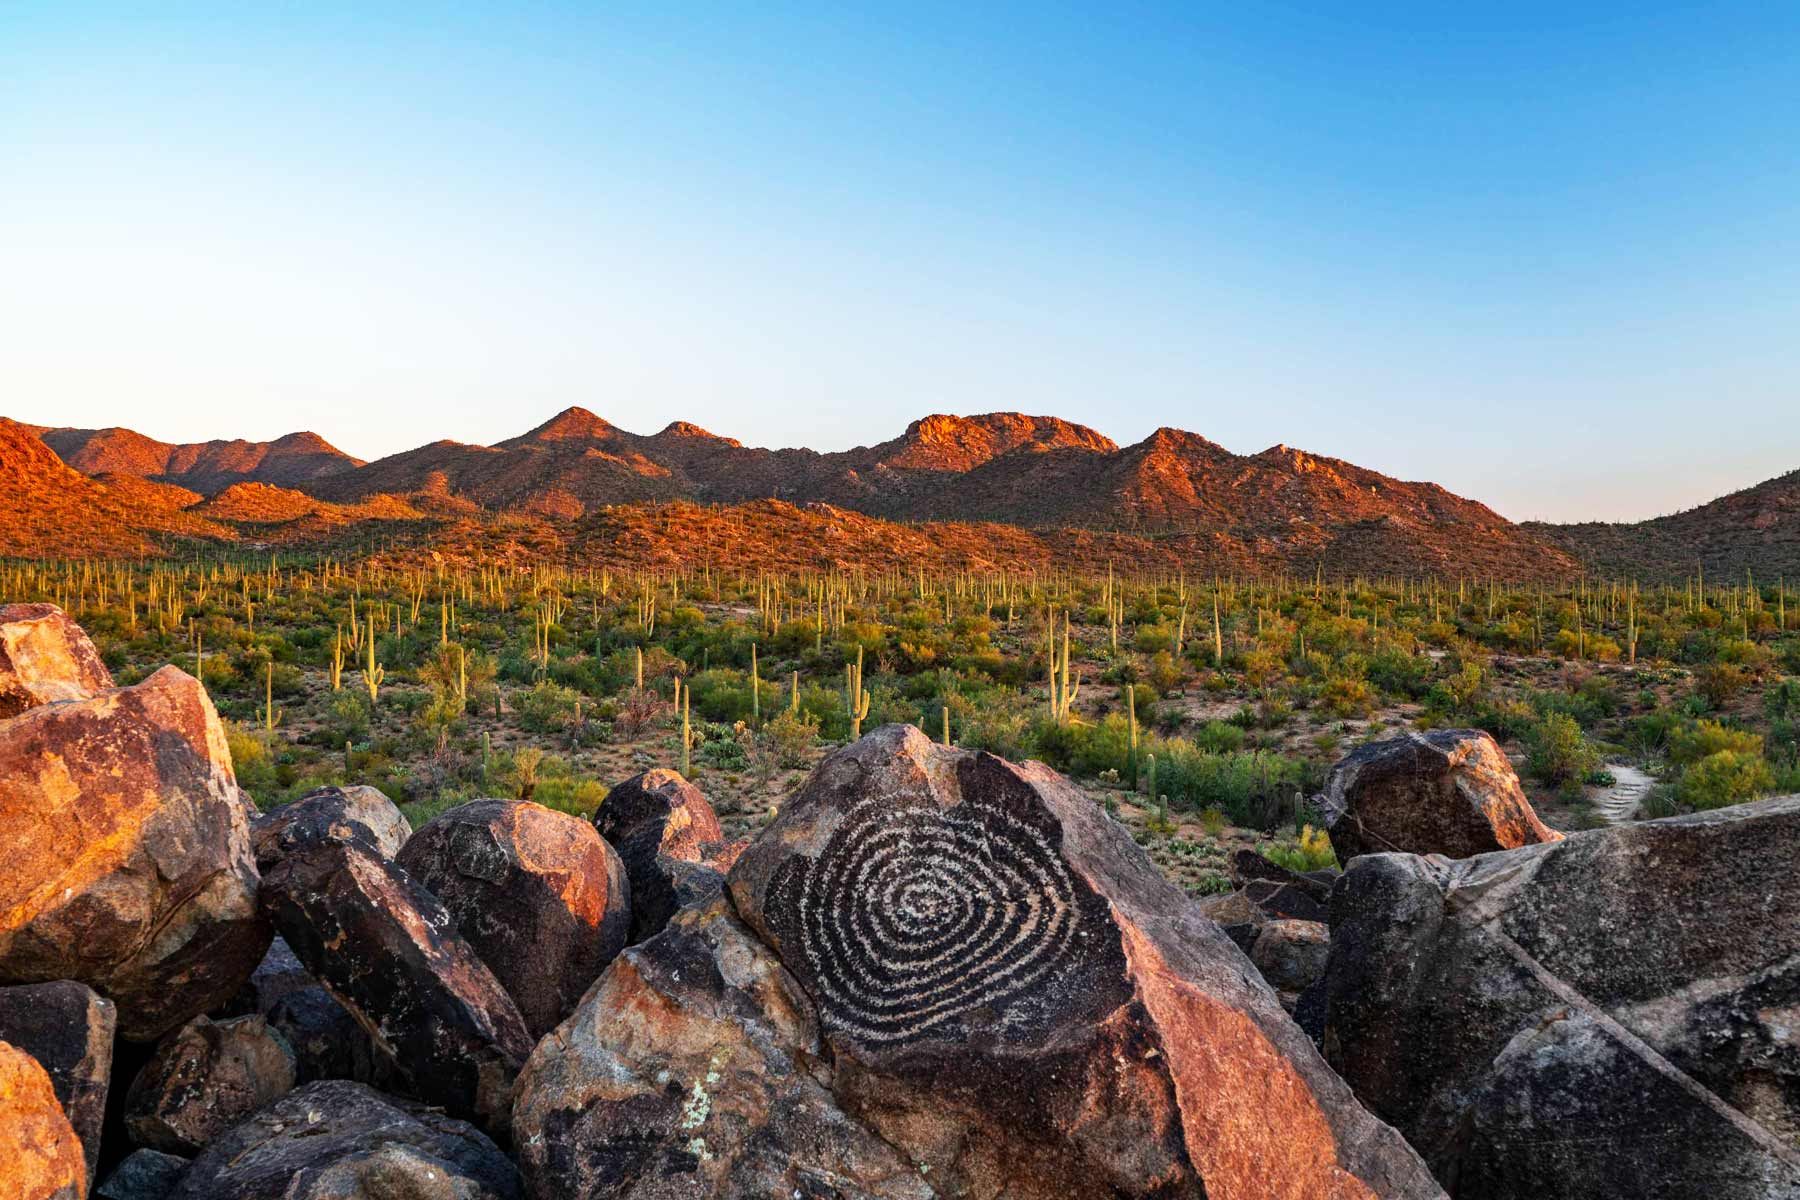 signal hill, saguaro national park tucson arizona